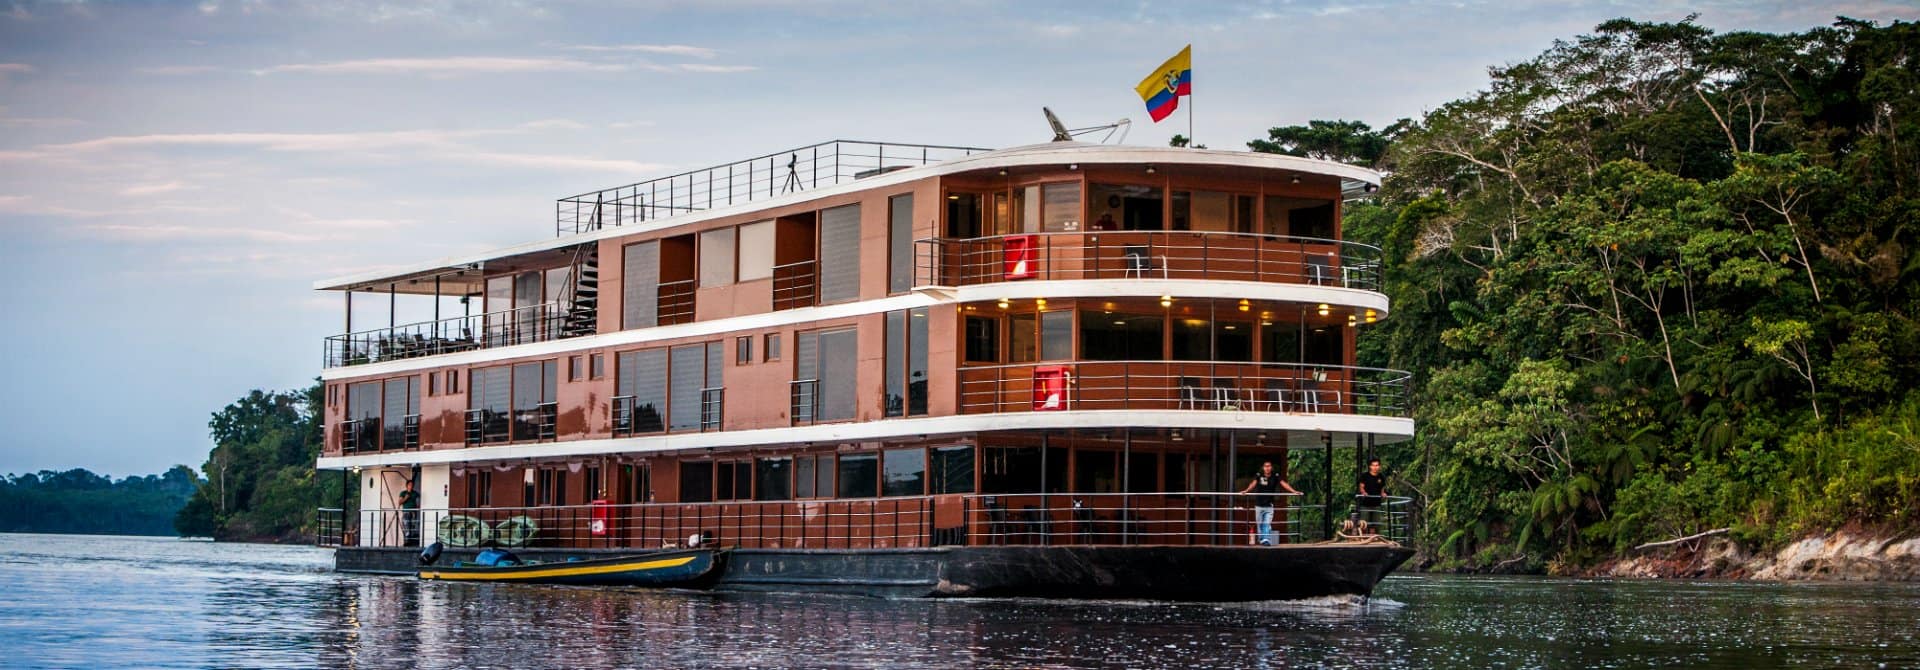 Anakonda Ecuador Amazon River Boat Latin Excursions